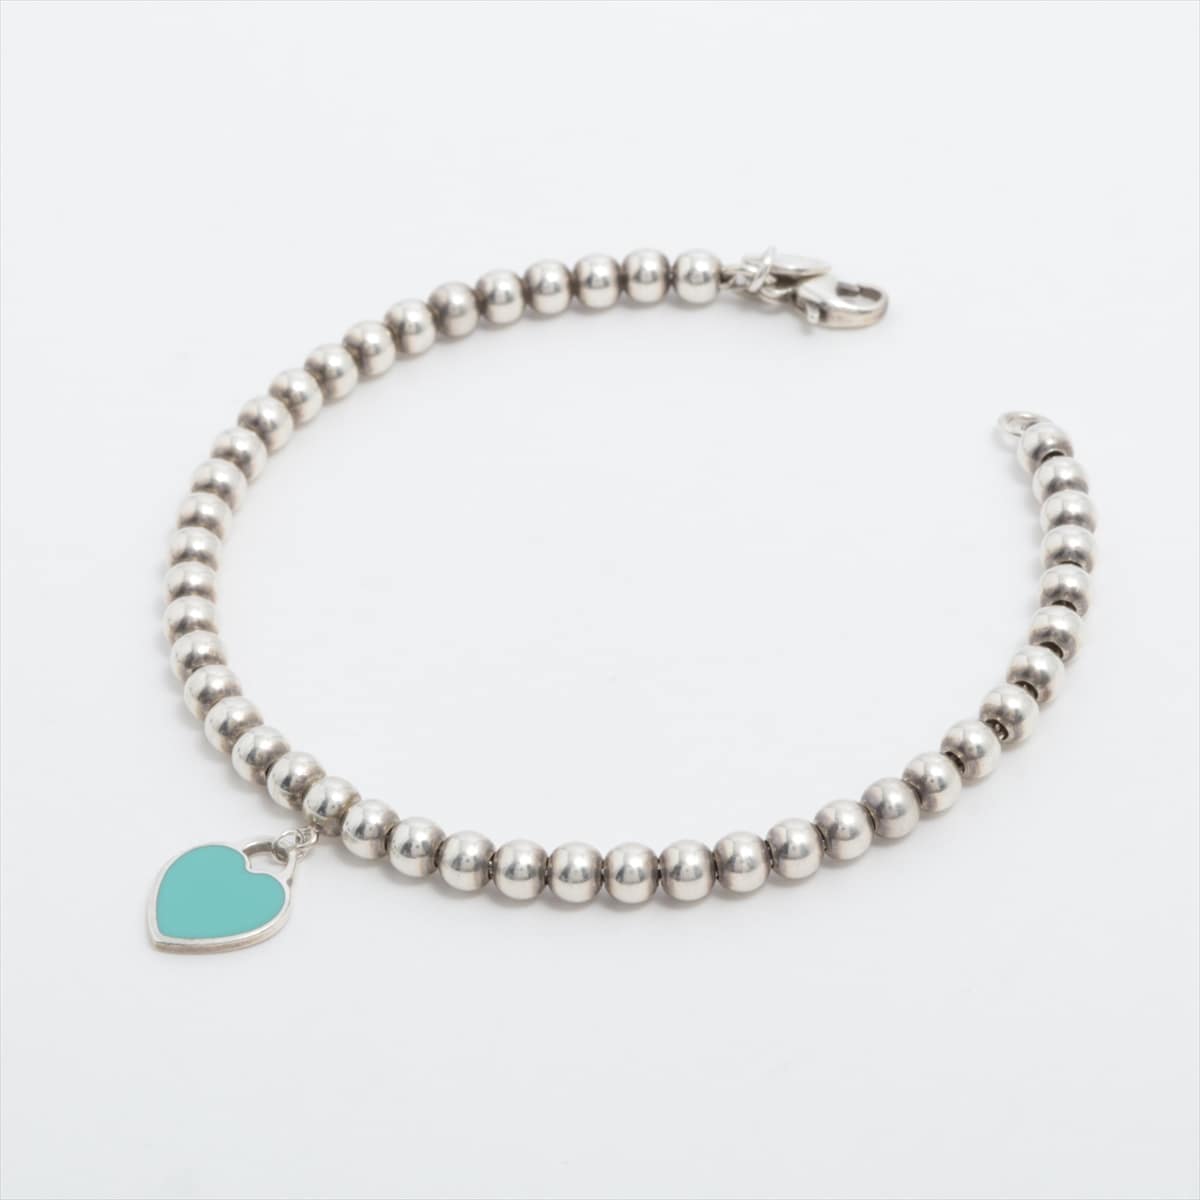 Tiffany Return To Tiffany Heart Tag Bracelet 925 5.6g Silver